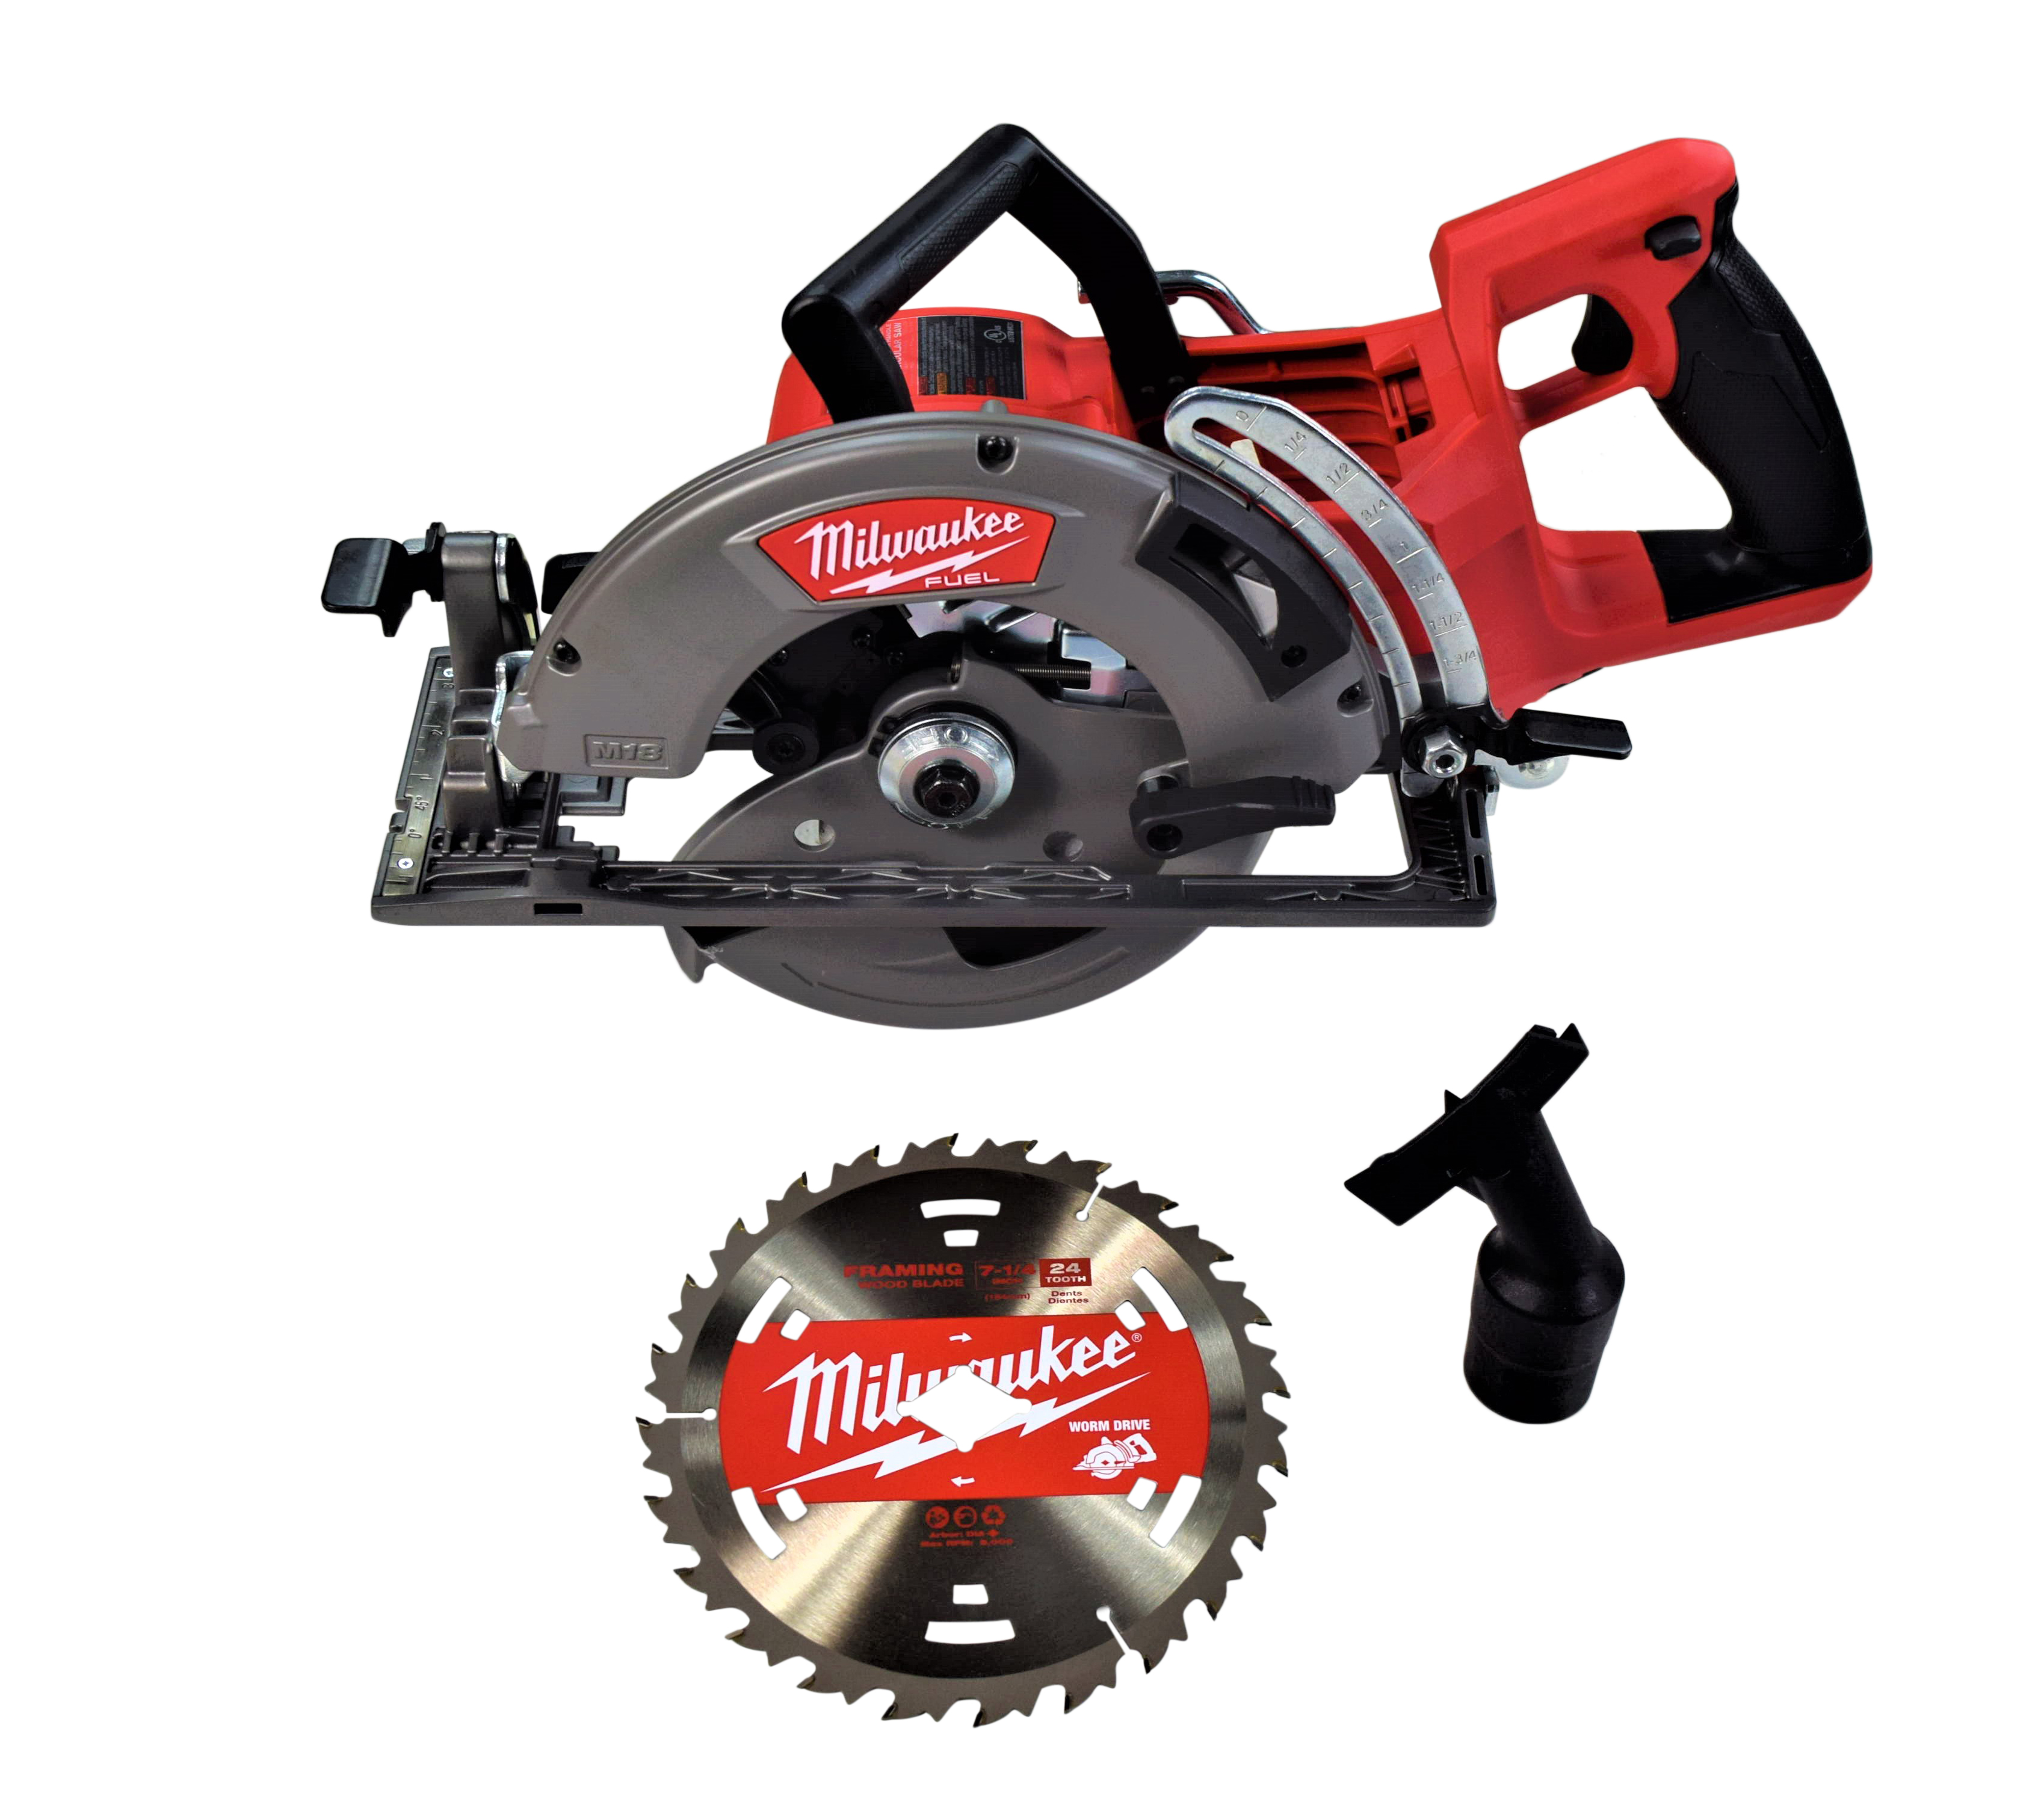 Milwaukee Tool 2830-20 M18 Fuel Rear Handle 7-1/4 in. Circular Saw